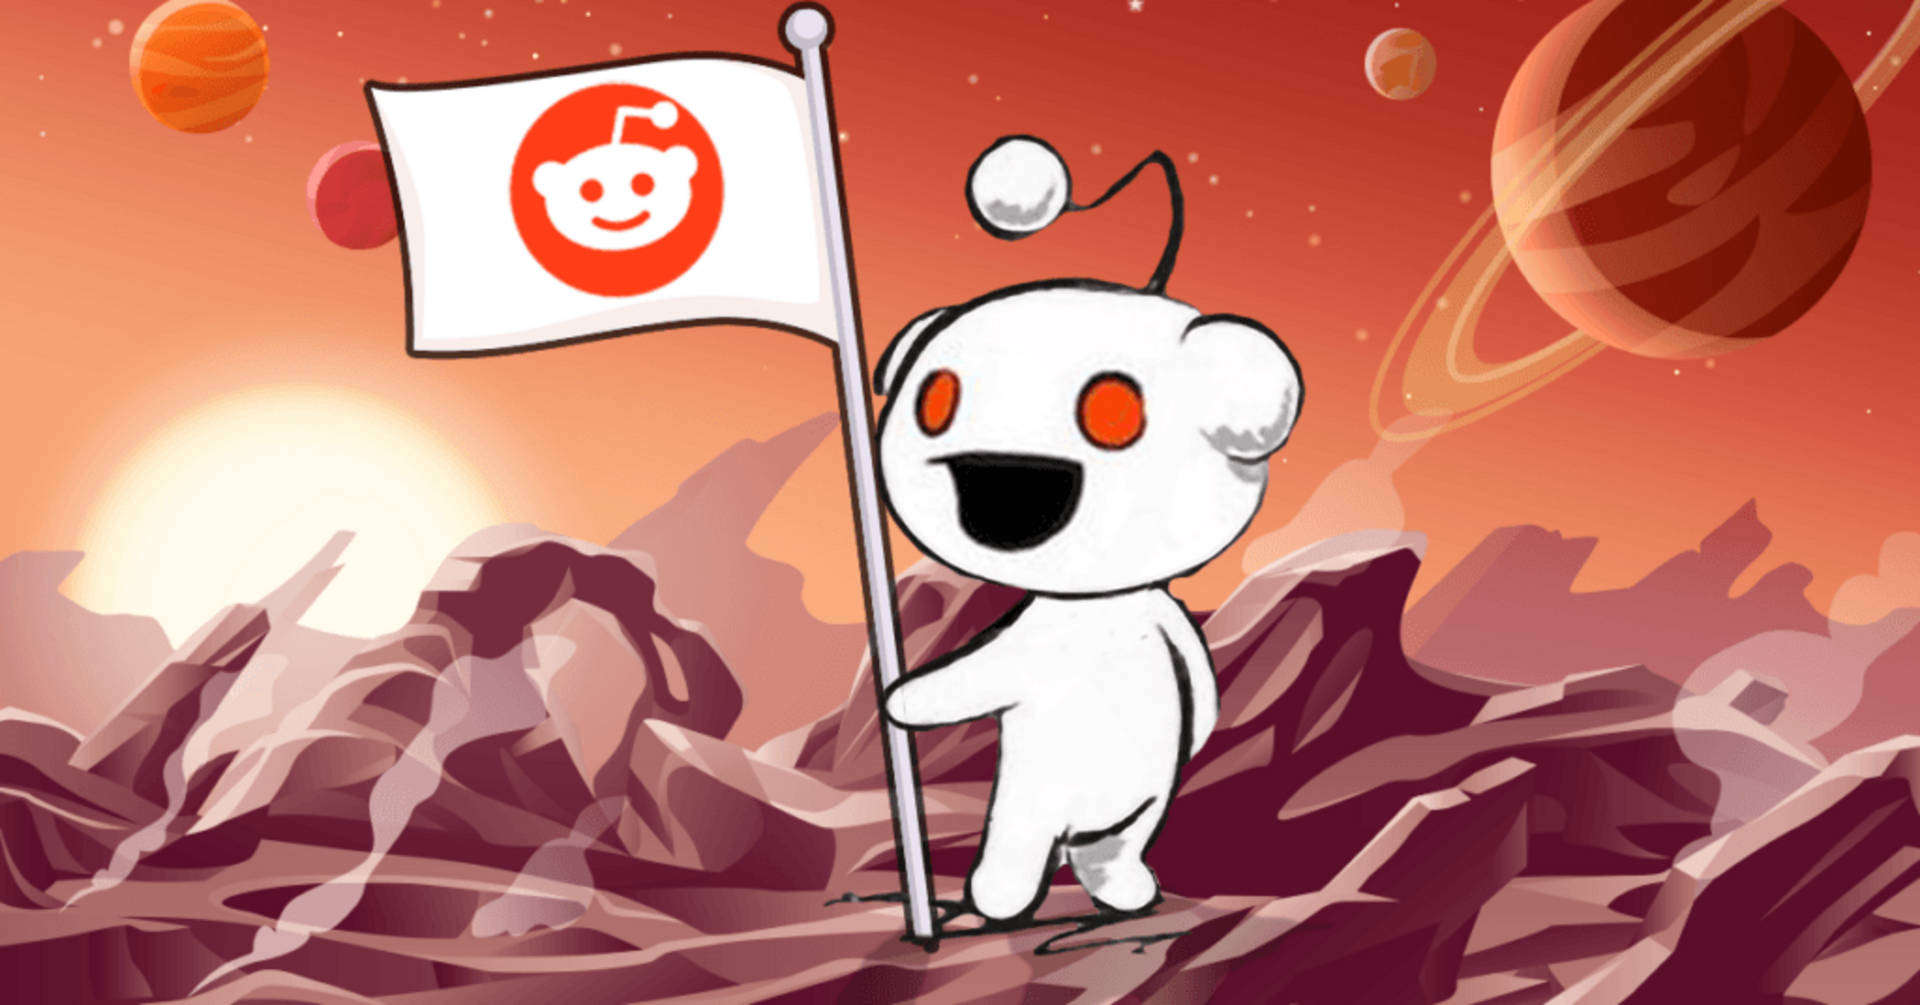 Reddit Snoo On Mars With Flag